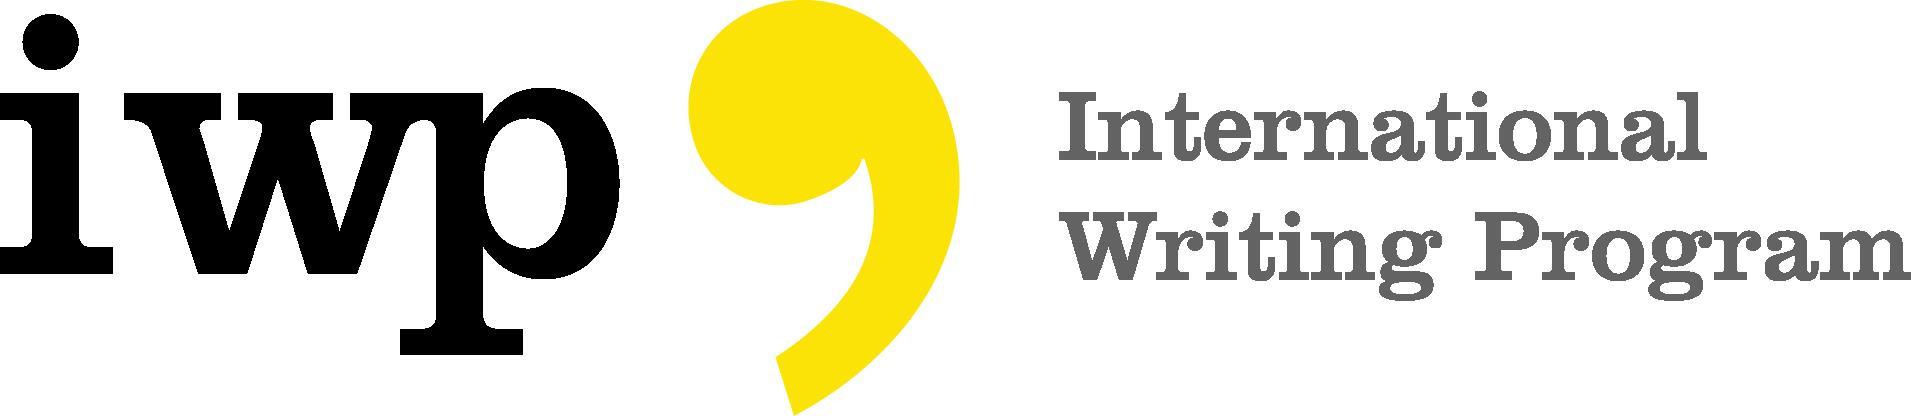 The International Writing Program Logo